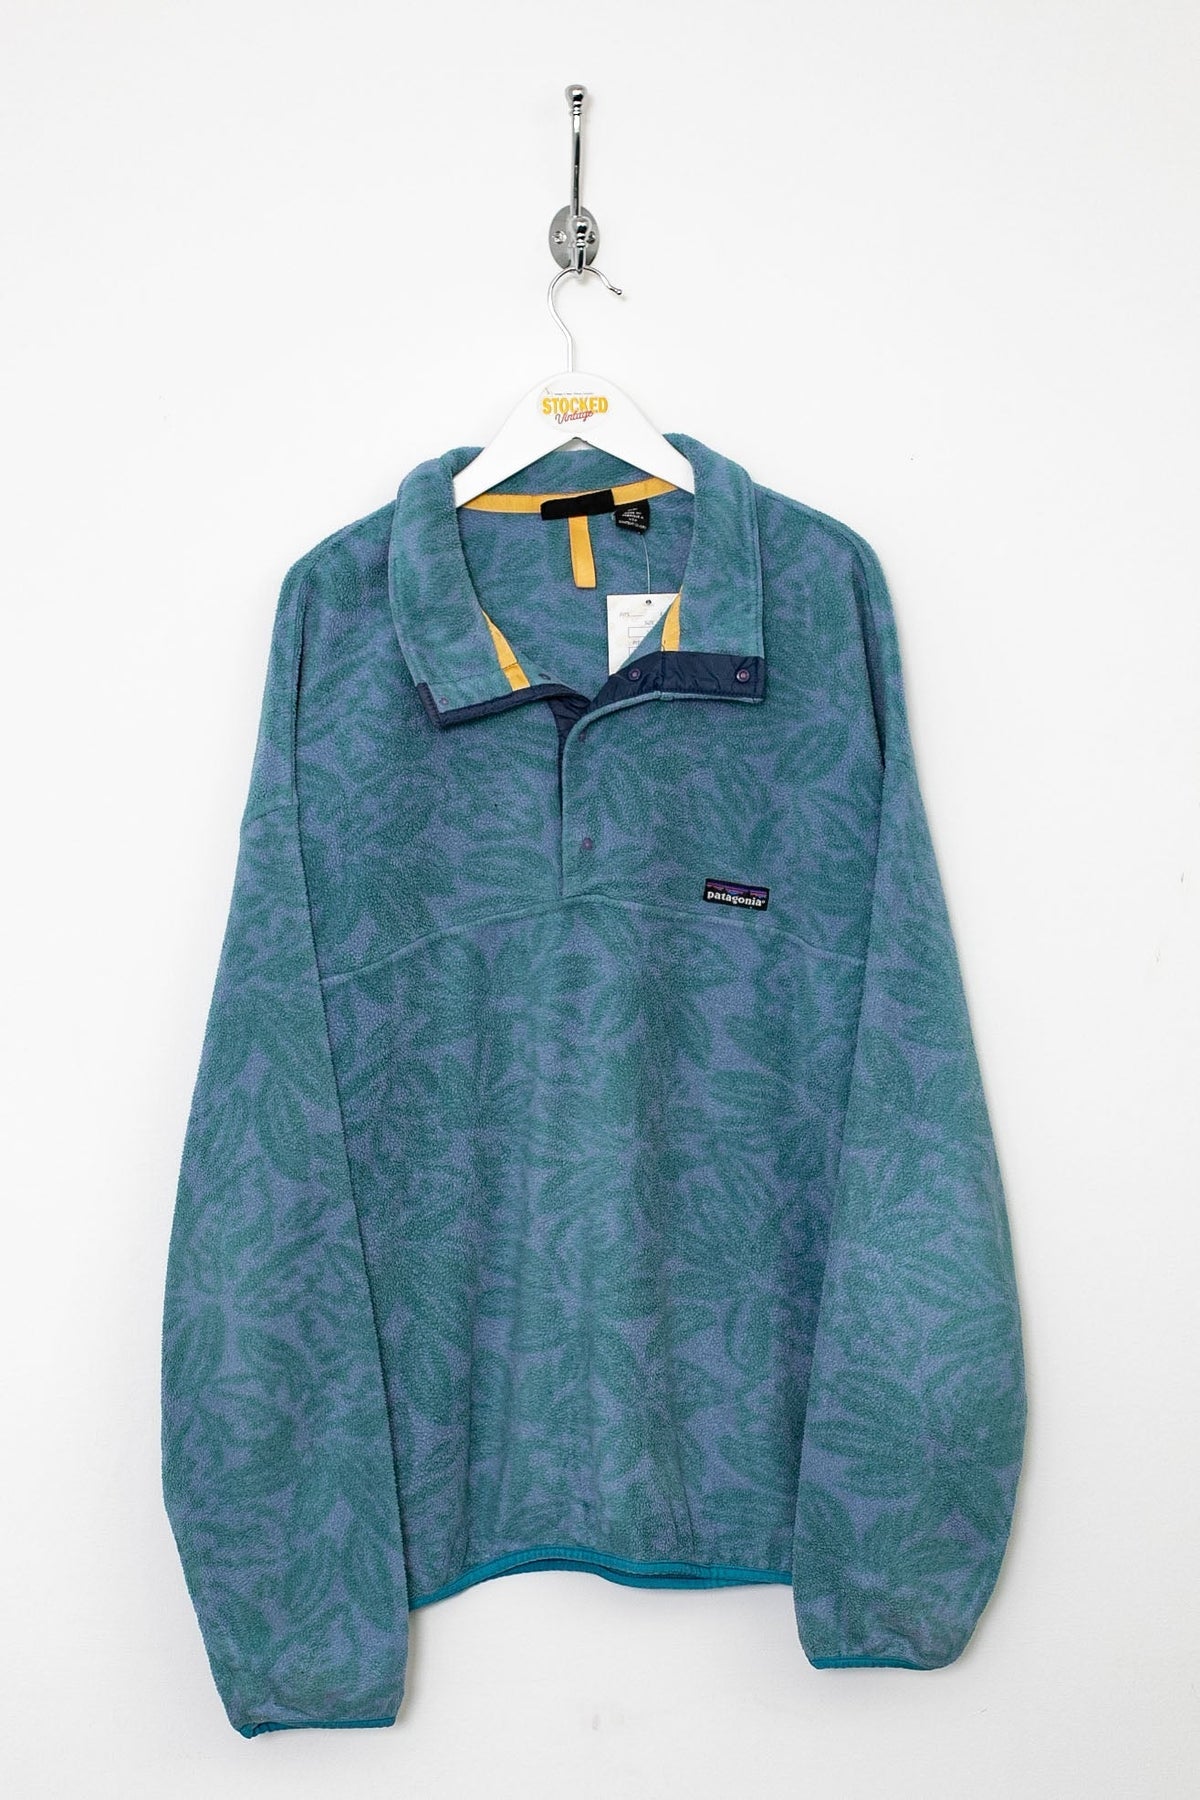 90s Patagonia Snap-T Fleece (XL)